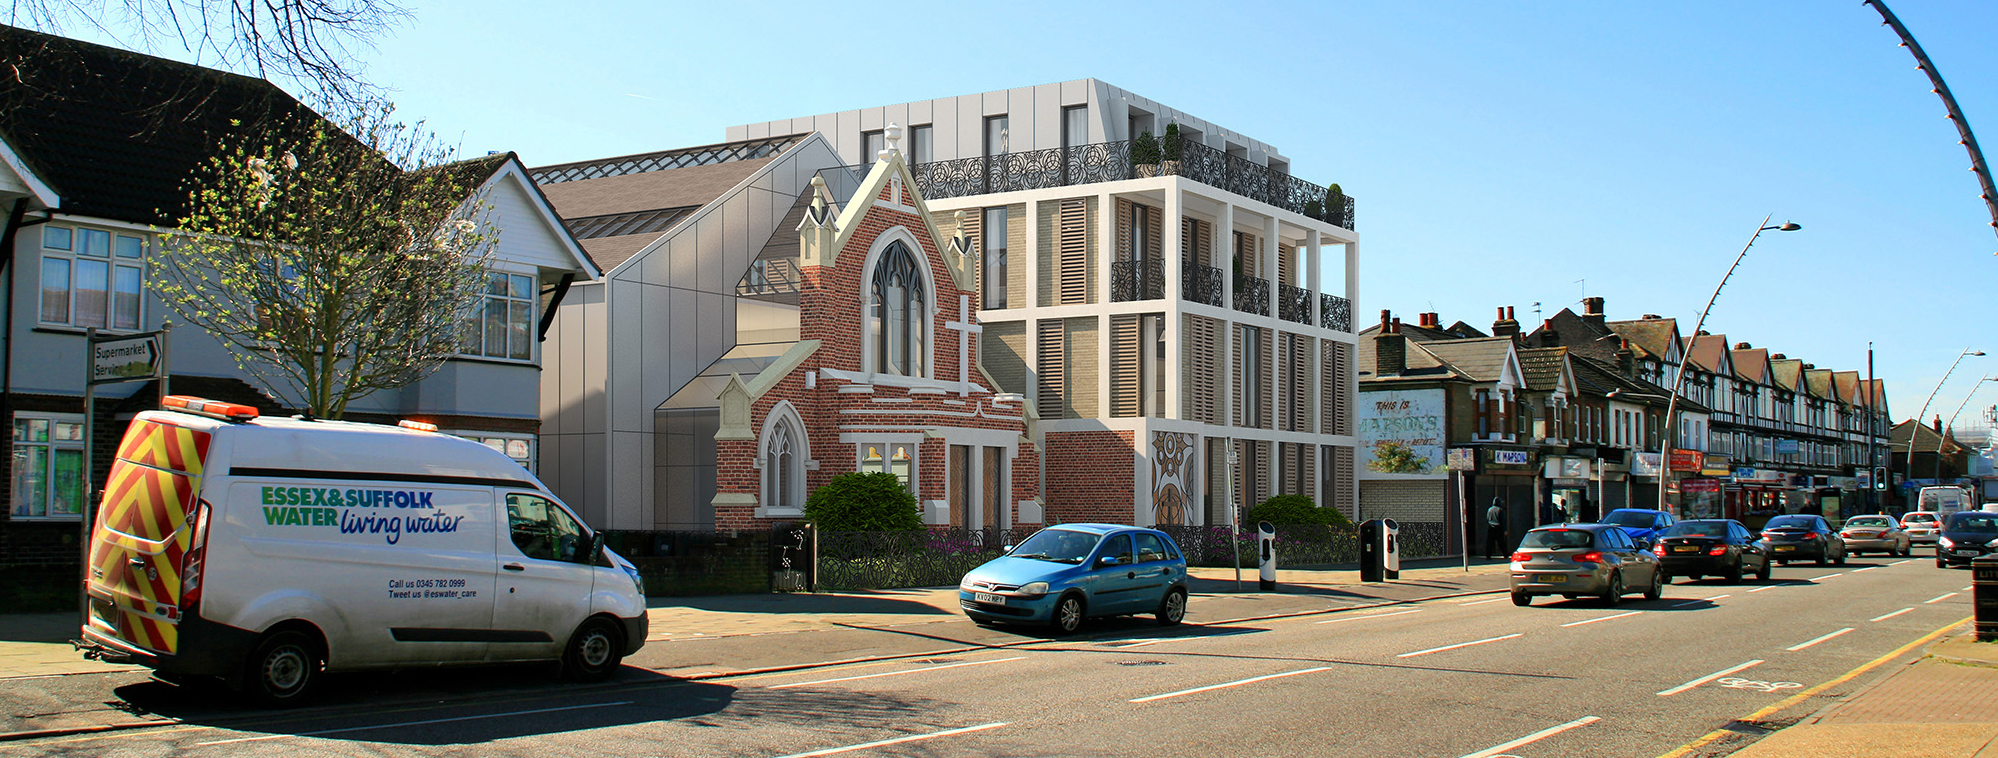 Architects design of Chadwell Heath Baptist Church development